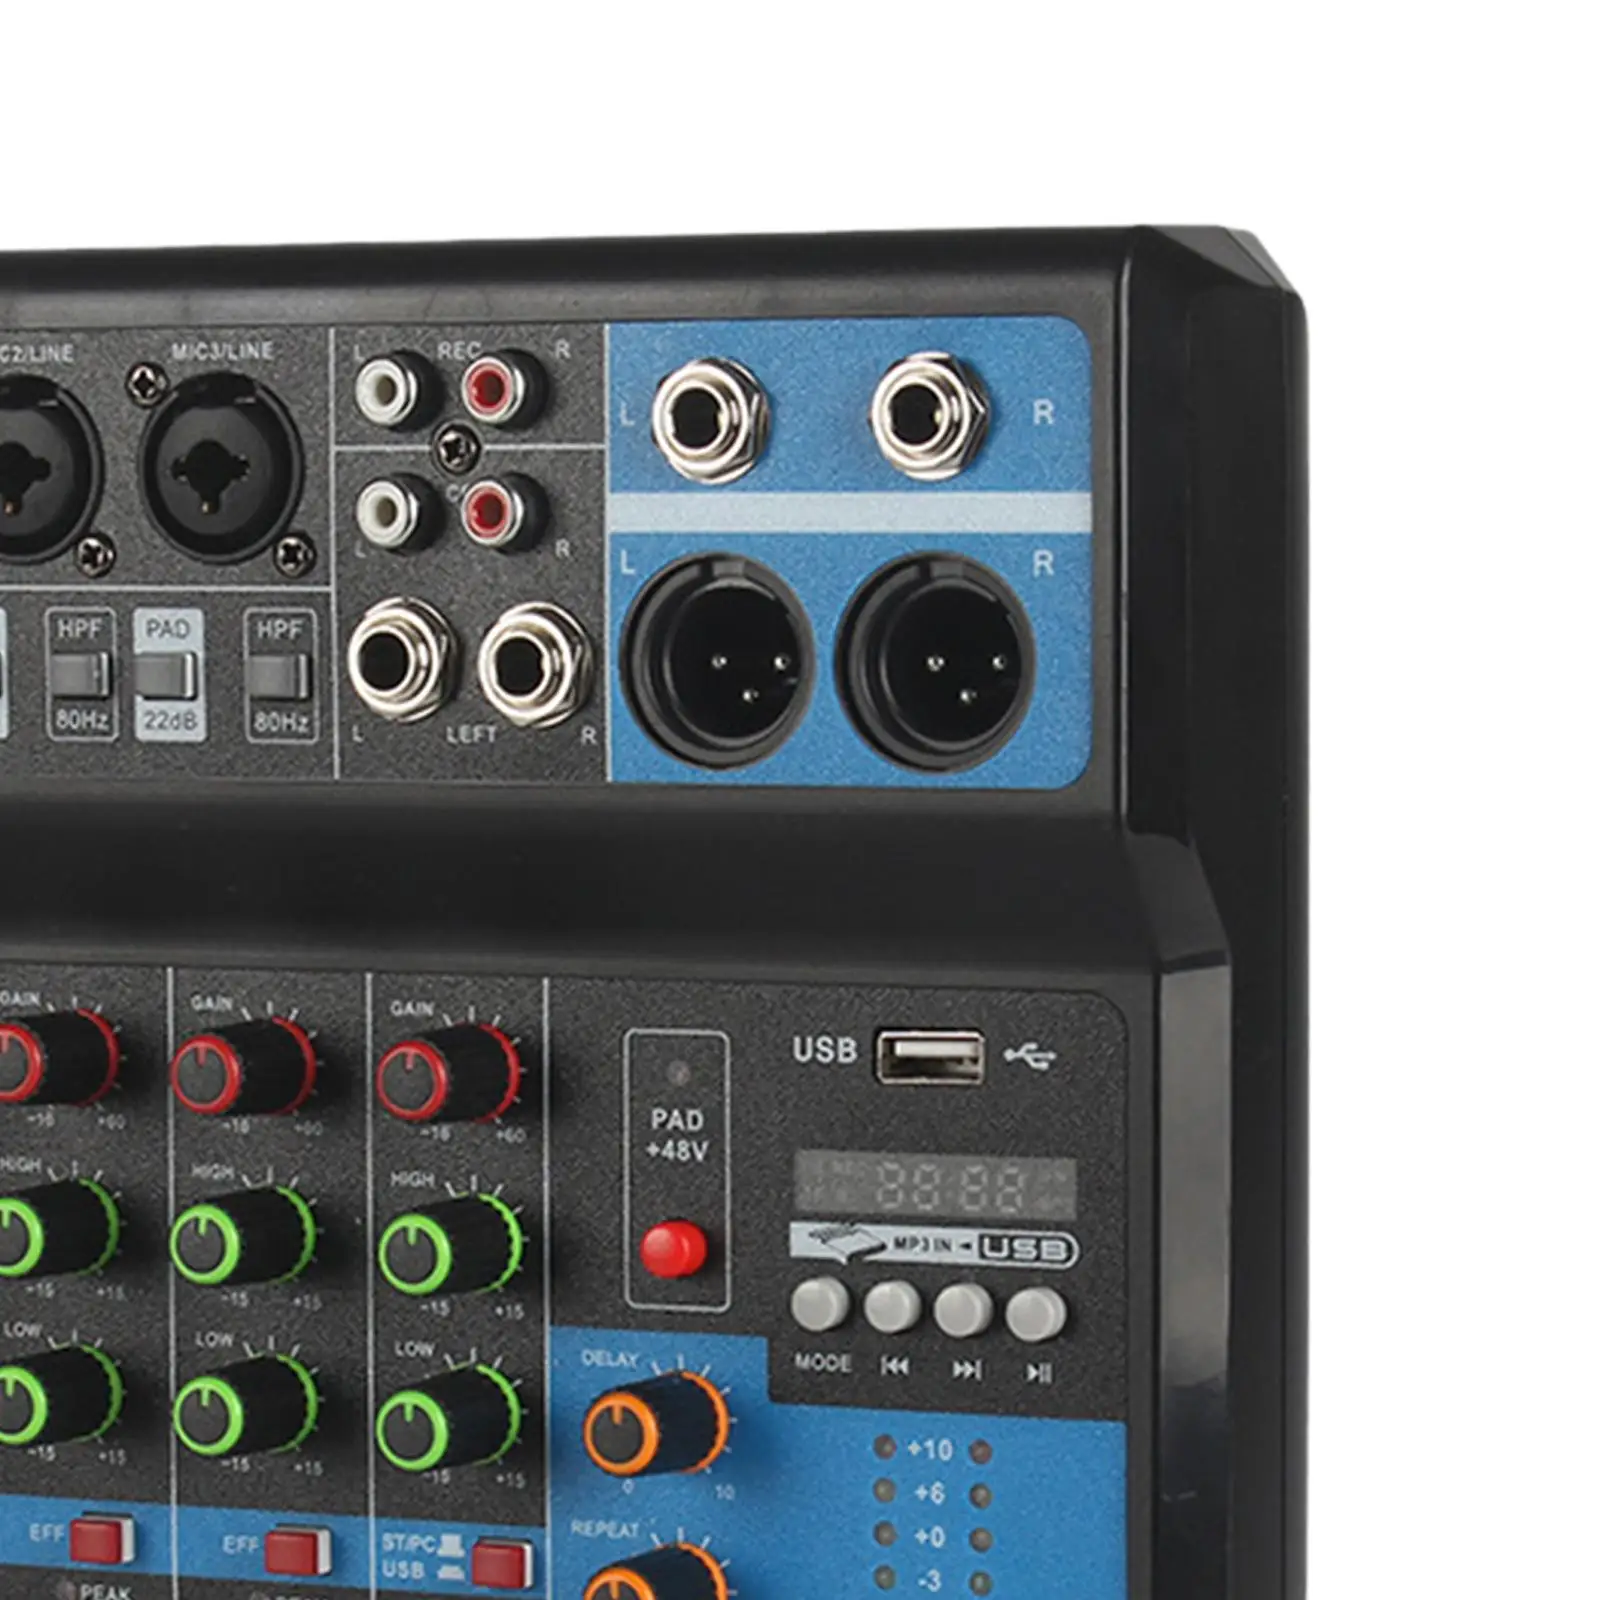 DJ Sound Mixer Mini Mixing Console Digital Mixer US Plug Size 20.5x21x6.5cm for Karaoke